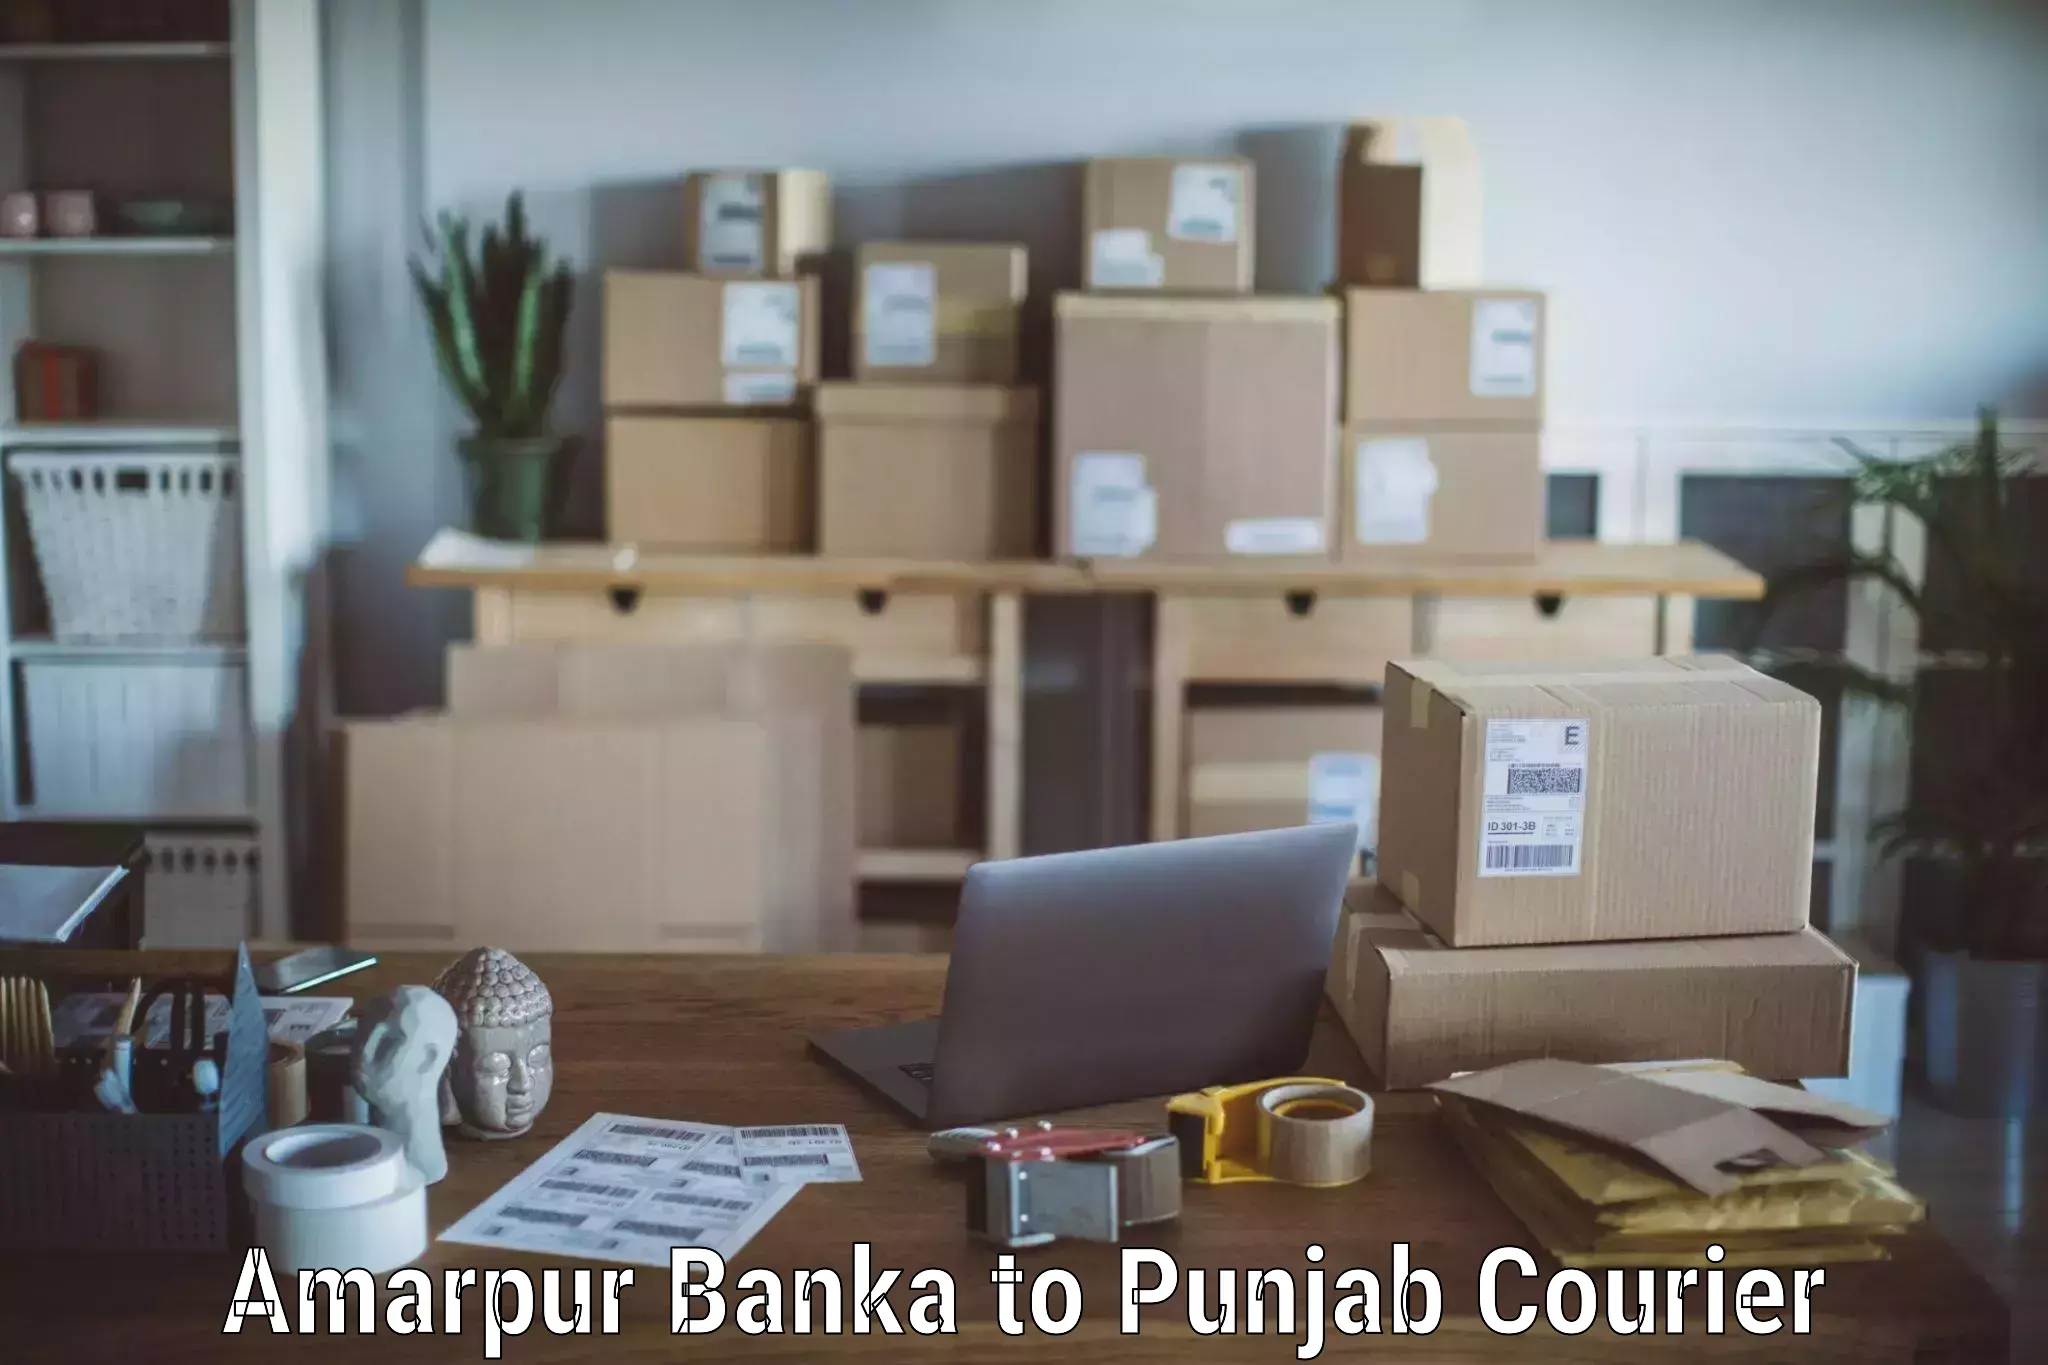 Trusted moving company Amarpur Banka to Dhuri